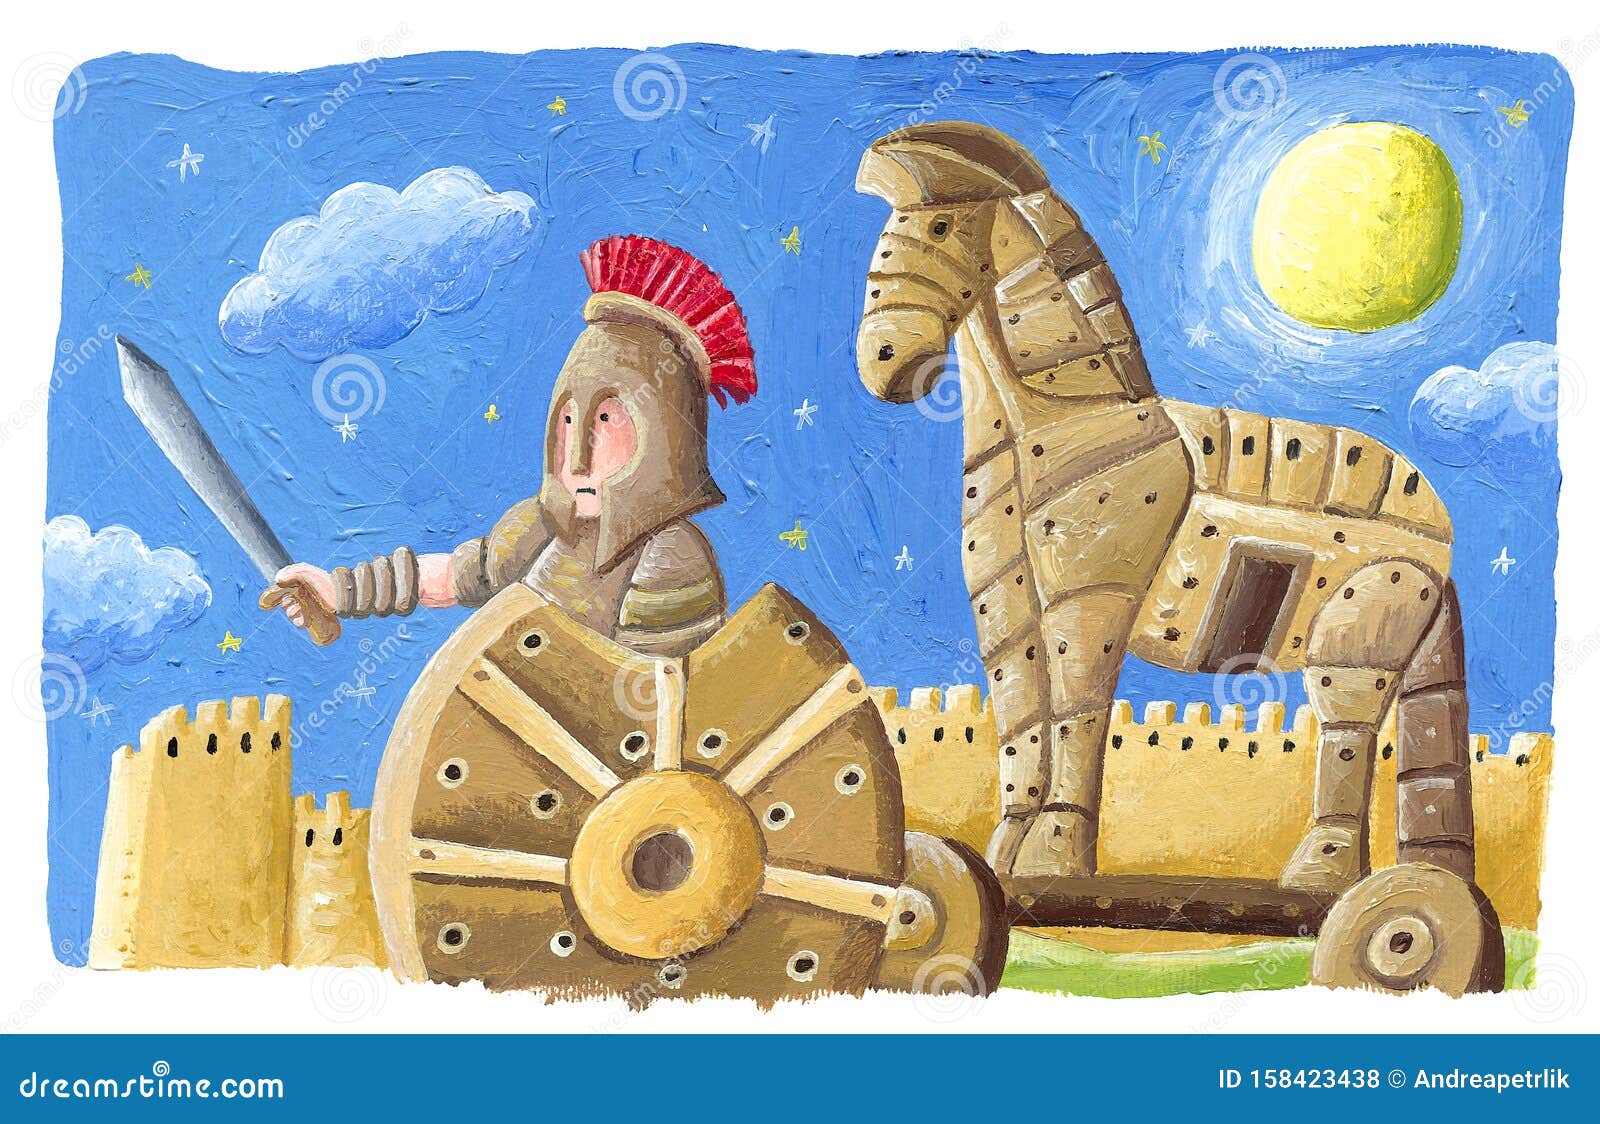 the trojan horse - trojan war, greek mythology